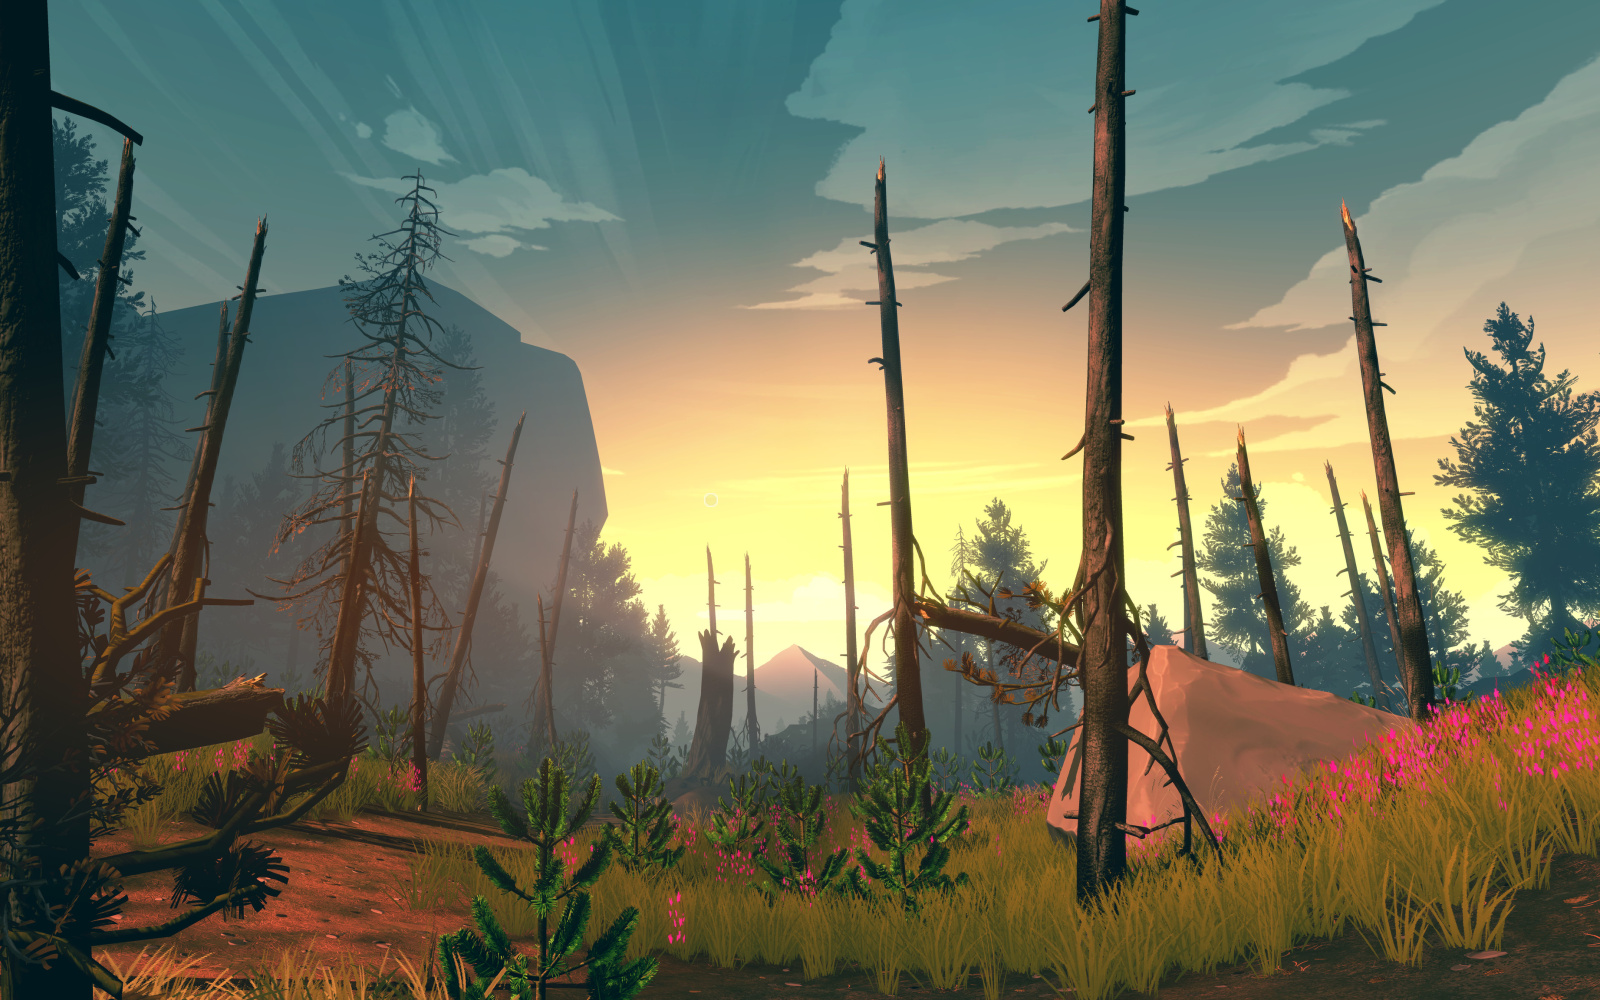 Screenshot: Sunrise and leafless trees